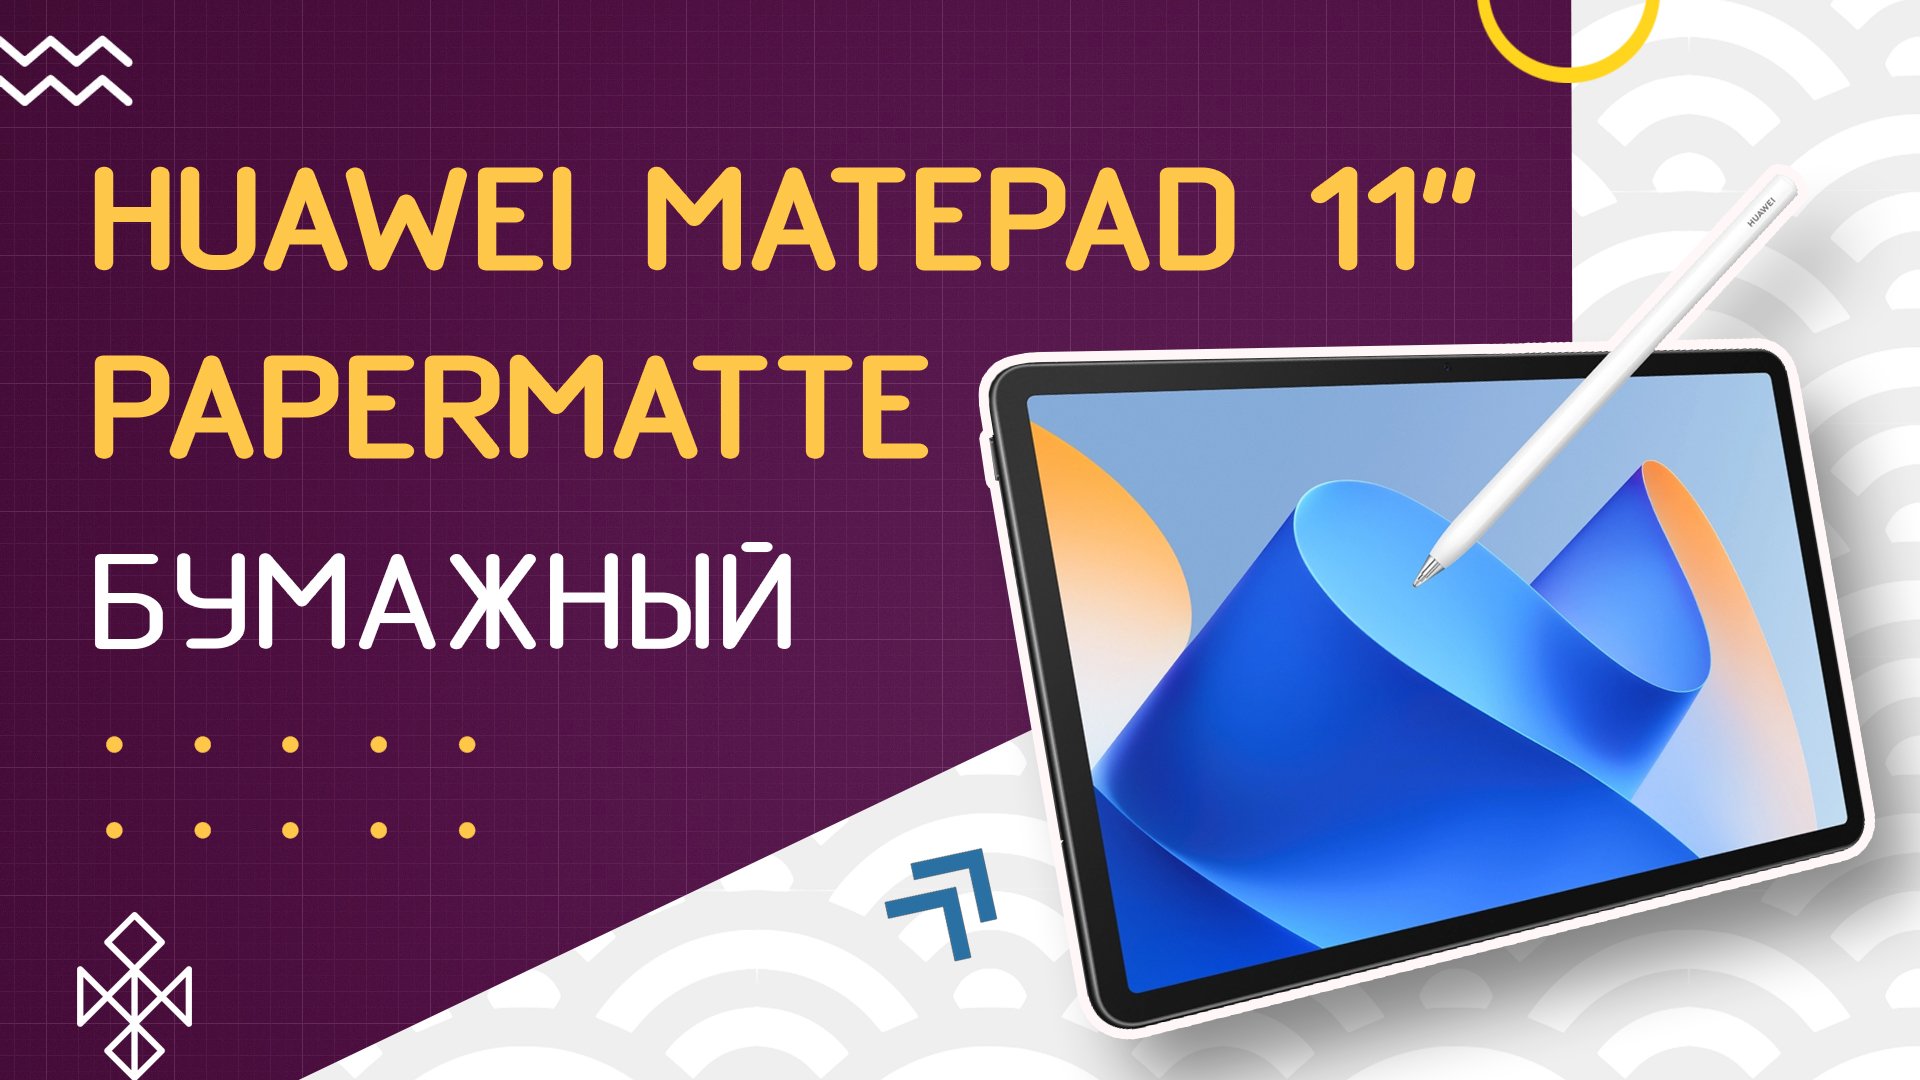 HUAWEI MatePad 11” PaperMatte : обзор "БУМАЖНОГО" планшета